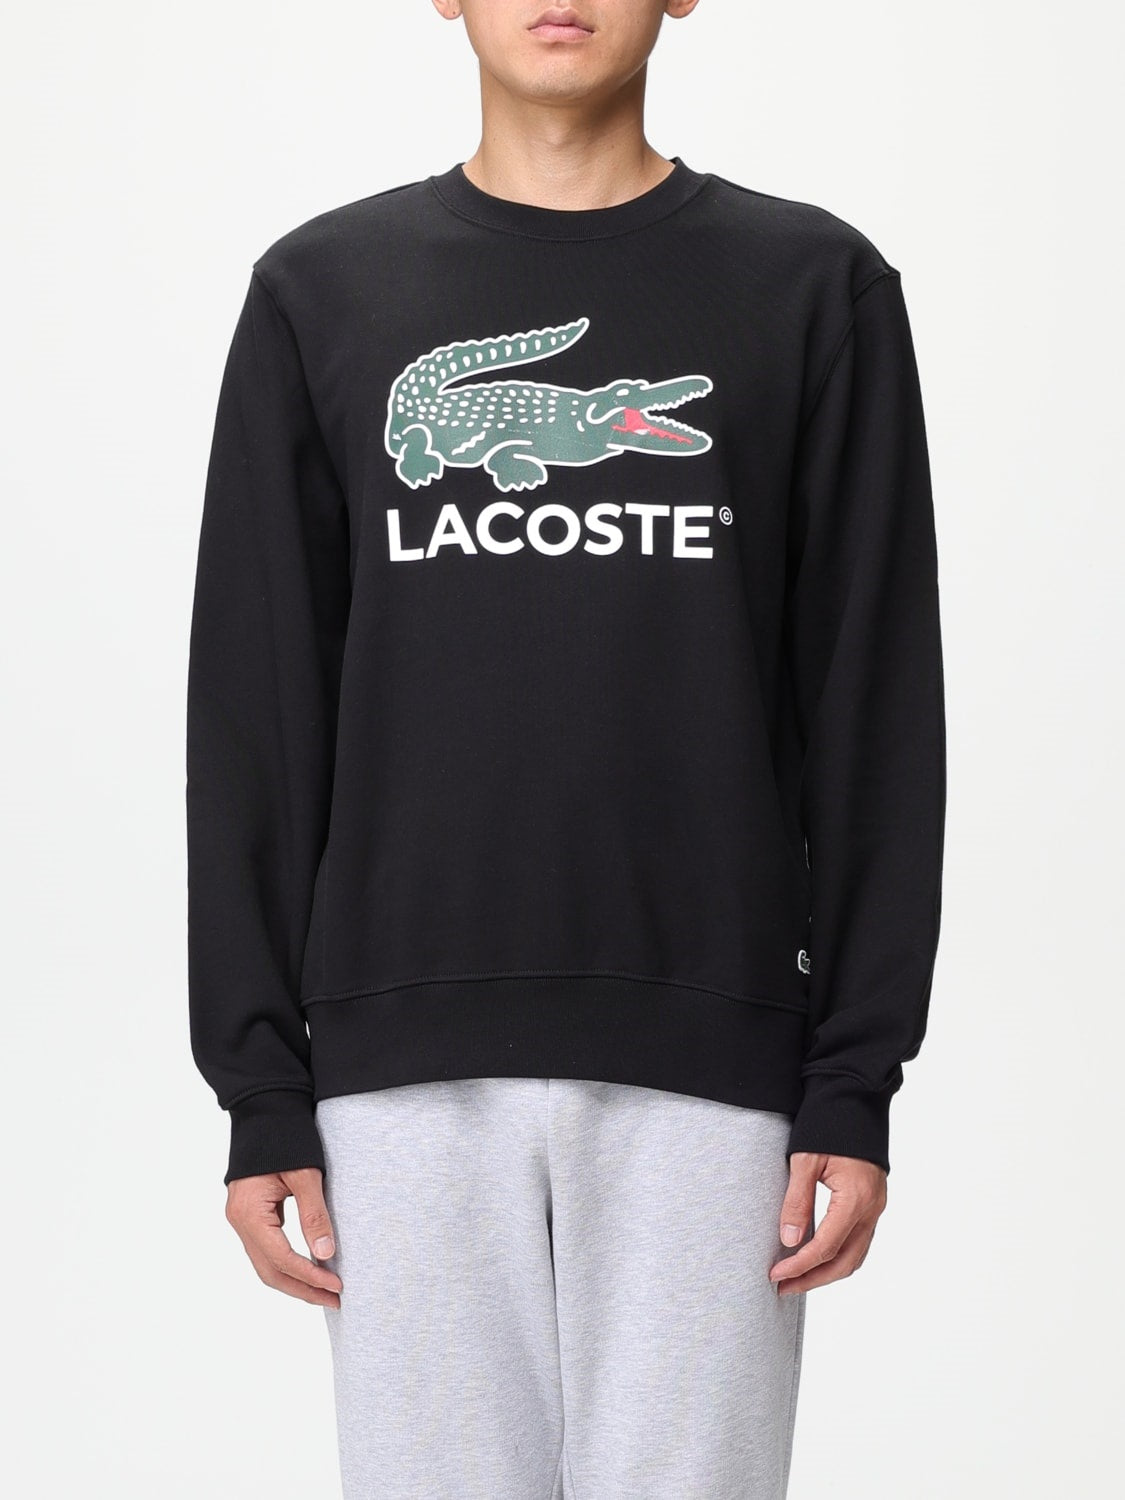 Lacoste - Men's Classic Fit Cotton Fleece Sweatshirt - Black